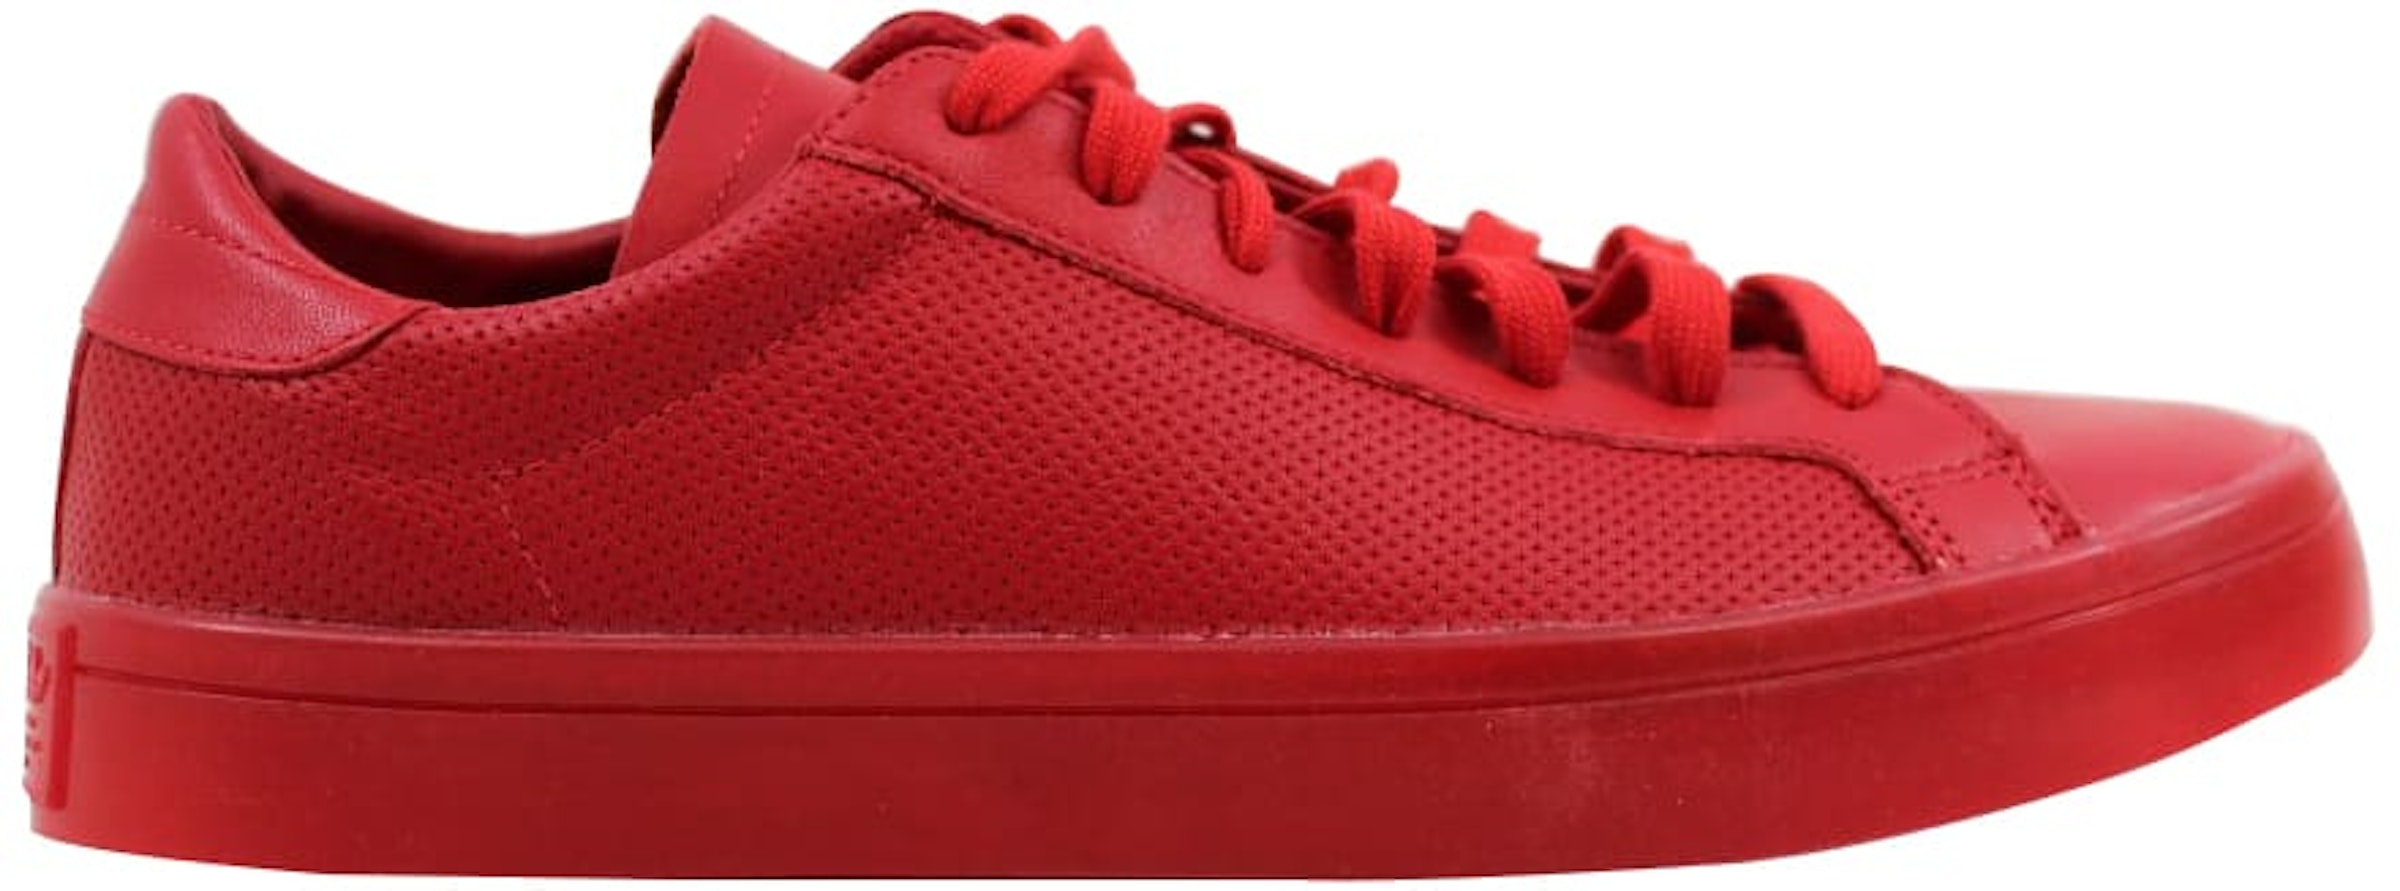 adidas Court Vantage Scarlet Red Men's - S80253 - US